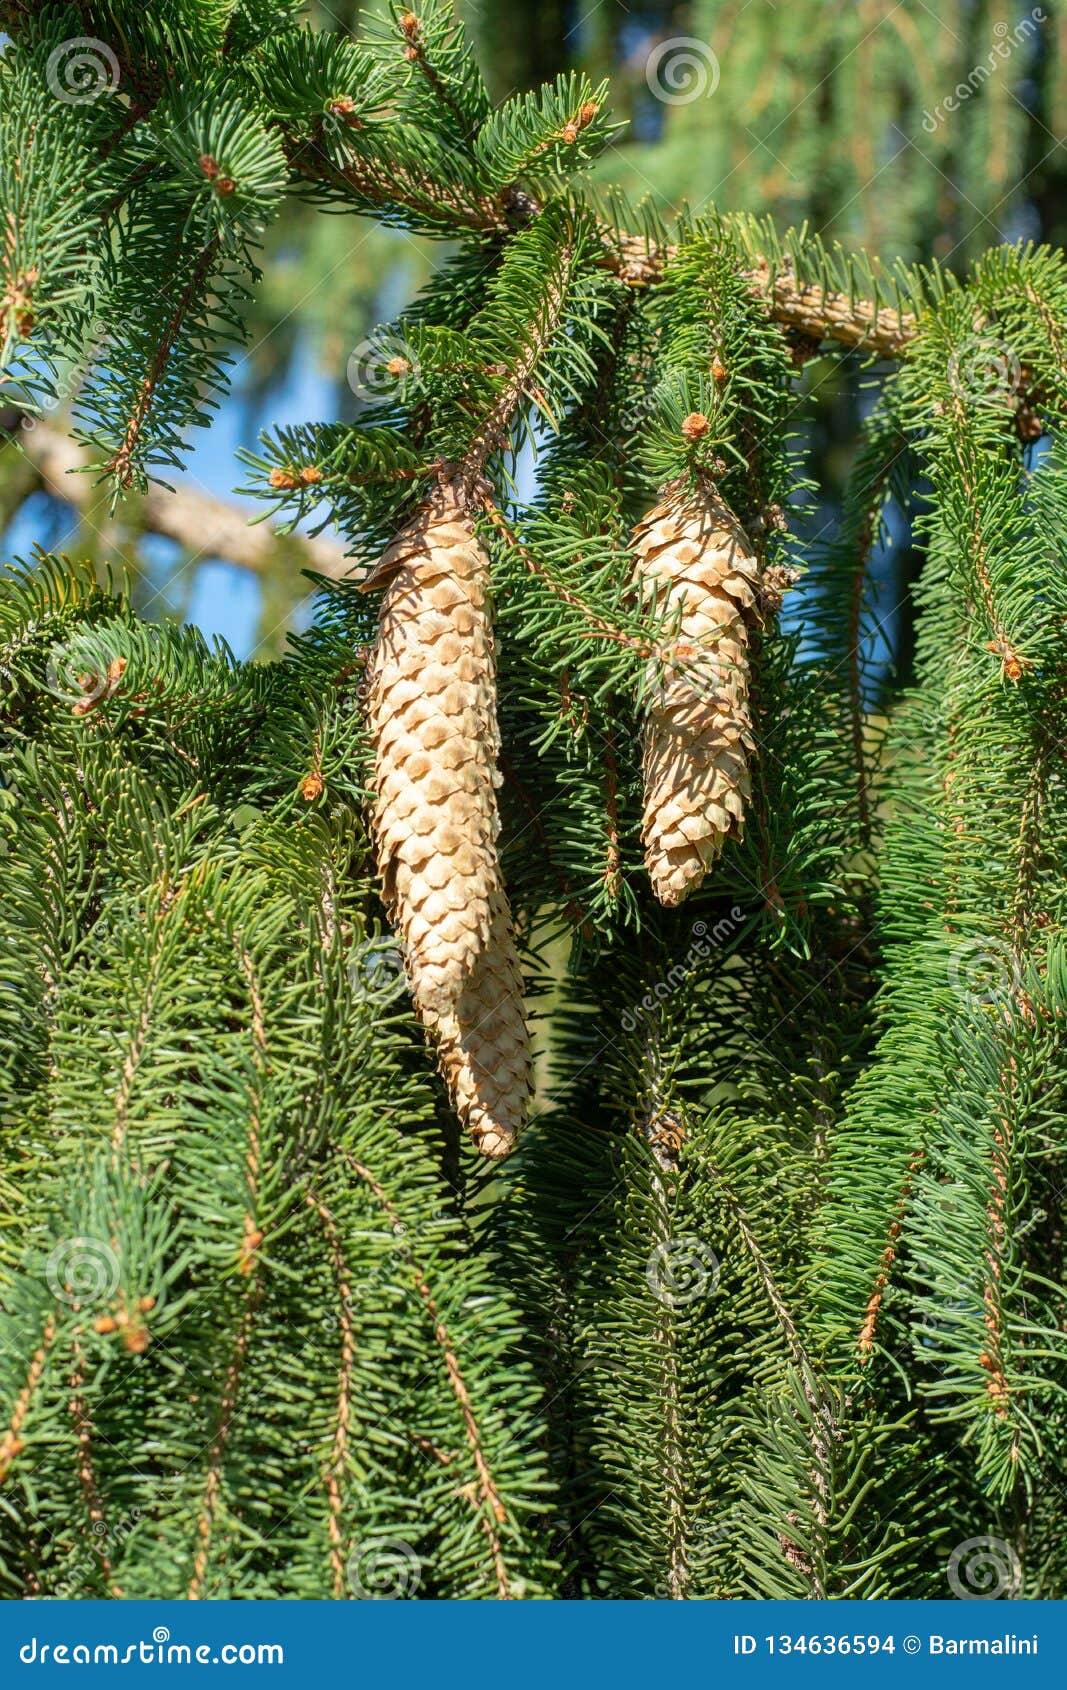 picea schrenkiana evergreen fir tree with long cones, christmas tree